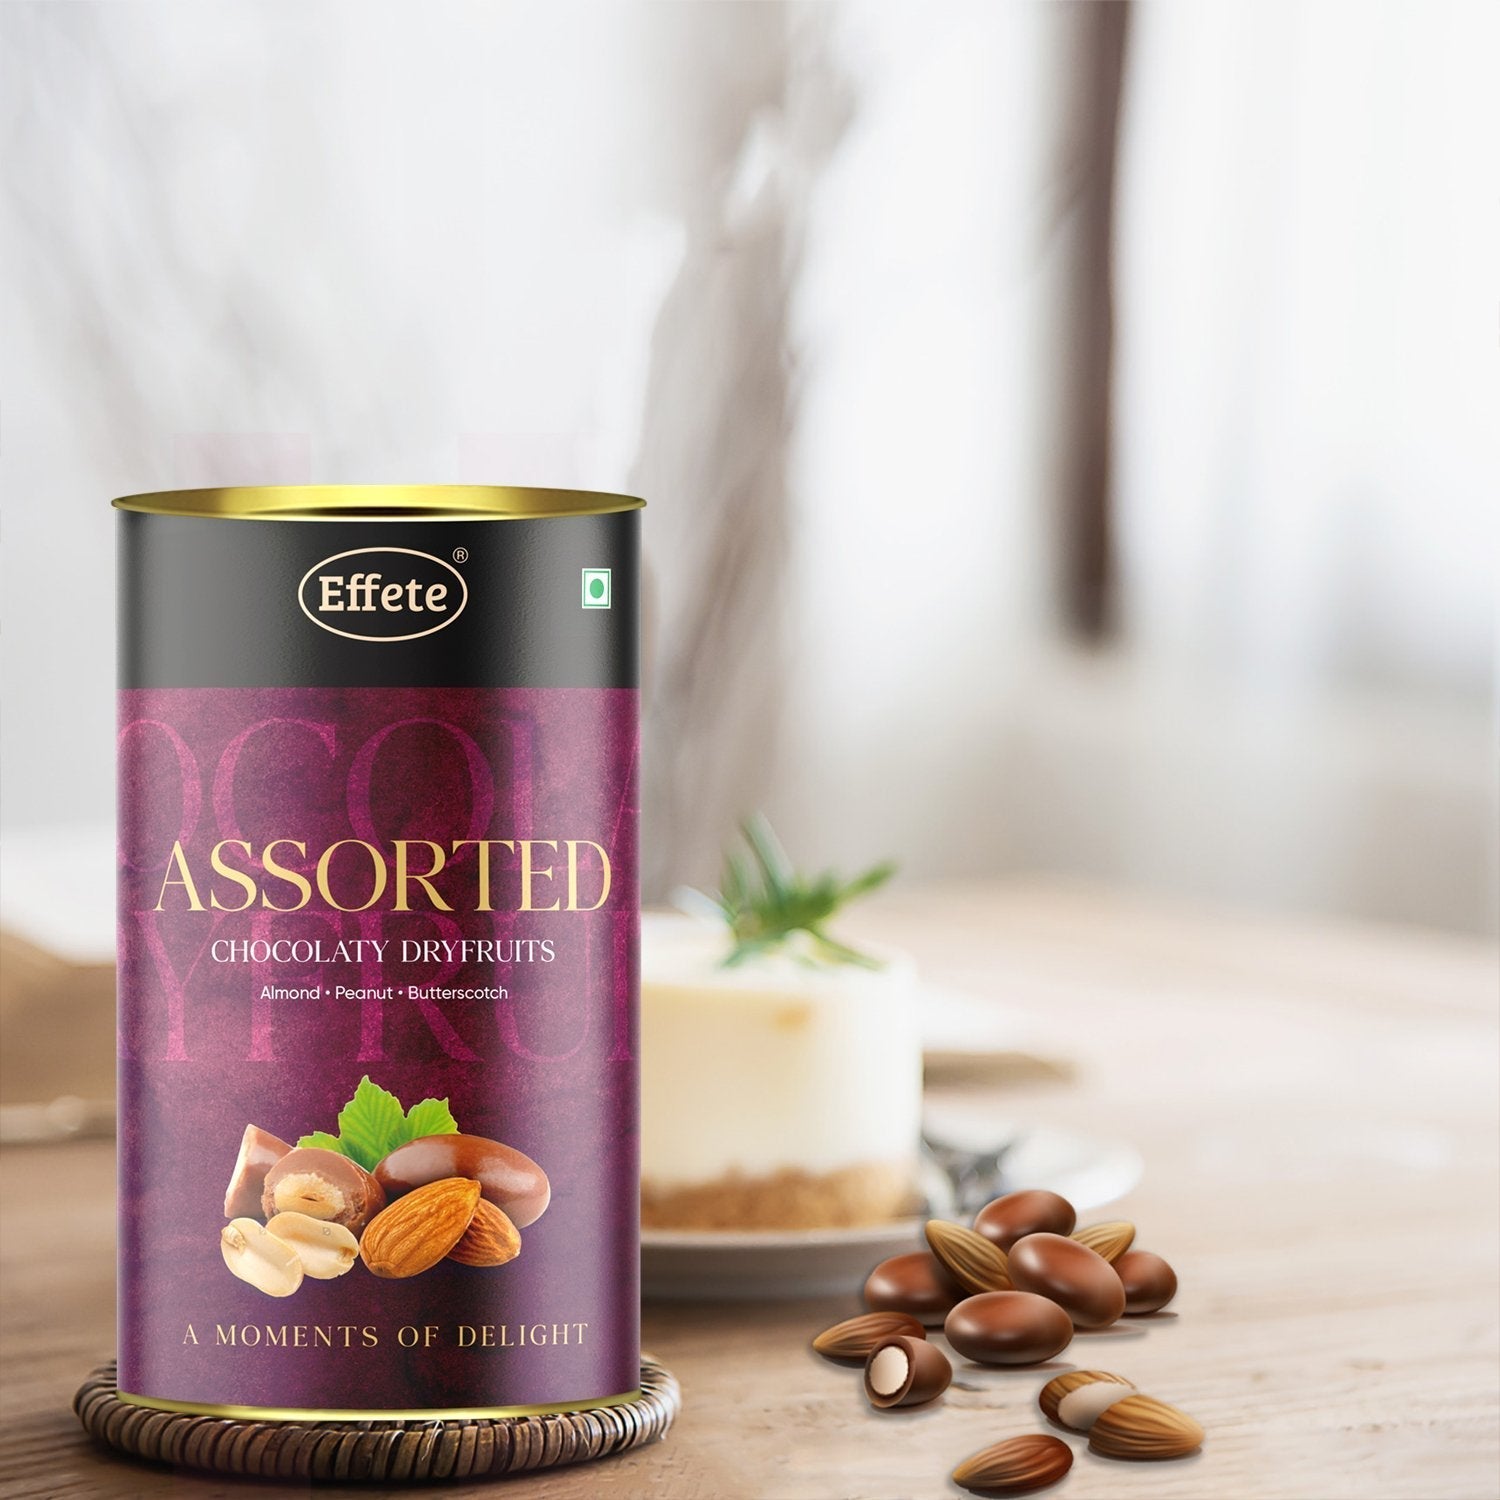 7808_Effete Assorted Chocolate Dryfruits - Almonds, Peanut & Butterscotch freeshipping - DeoDap